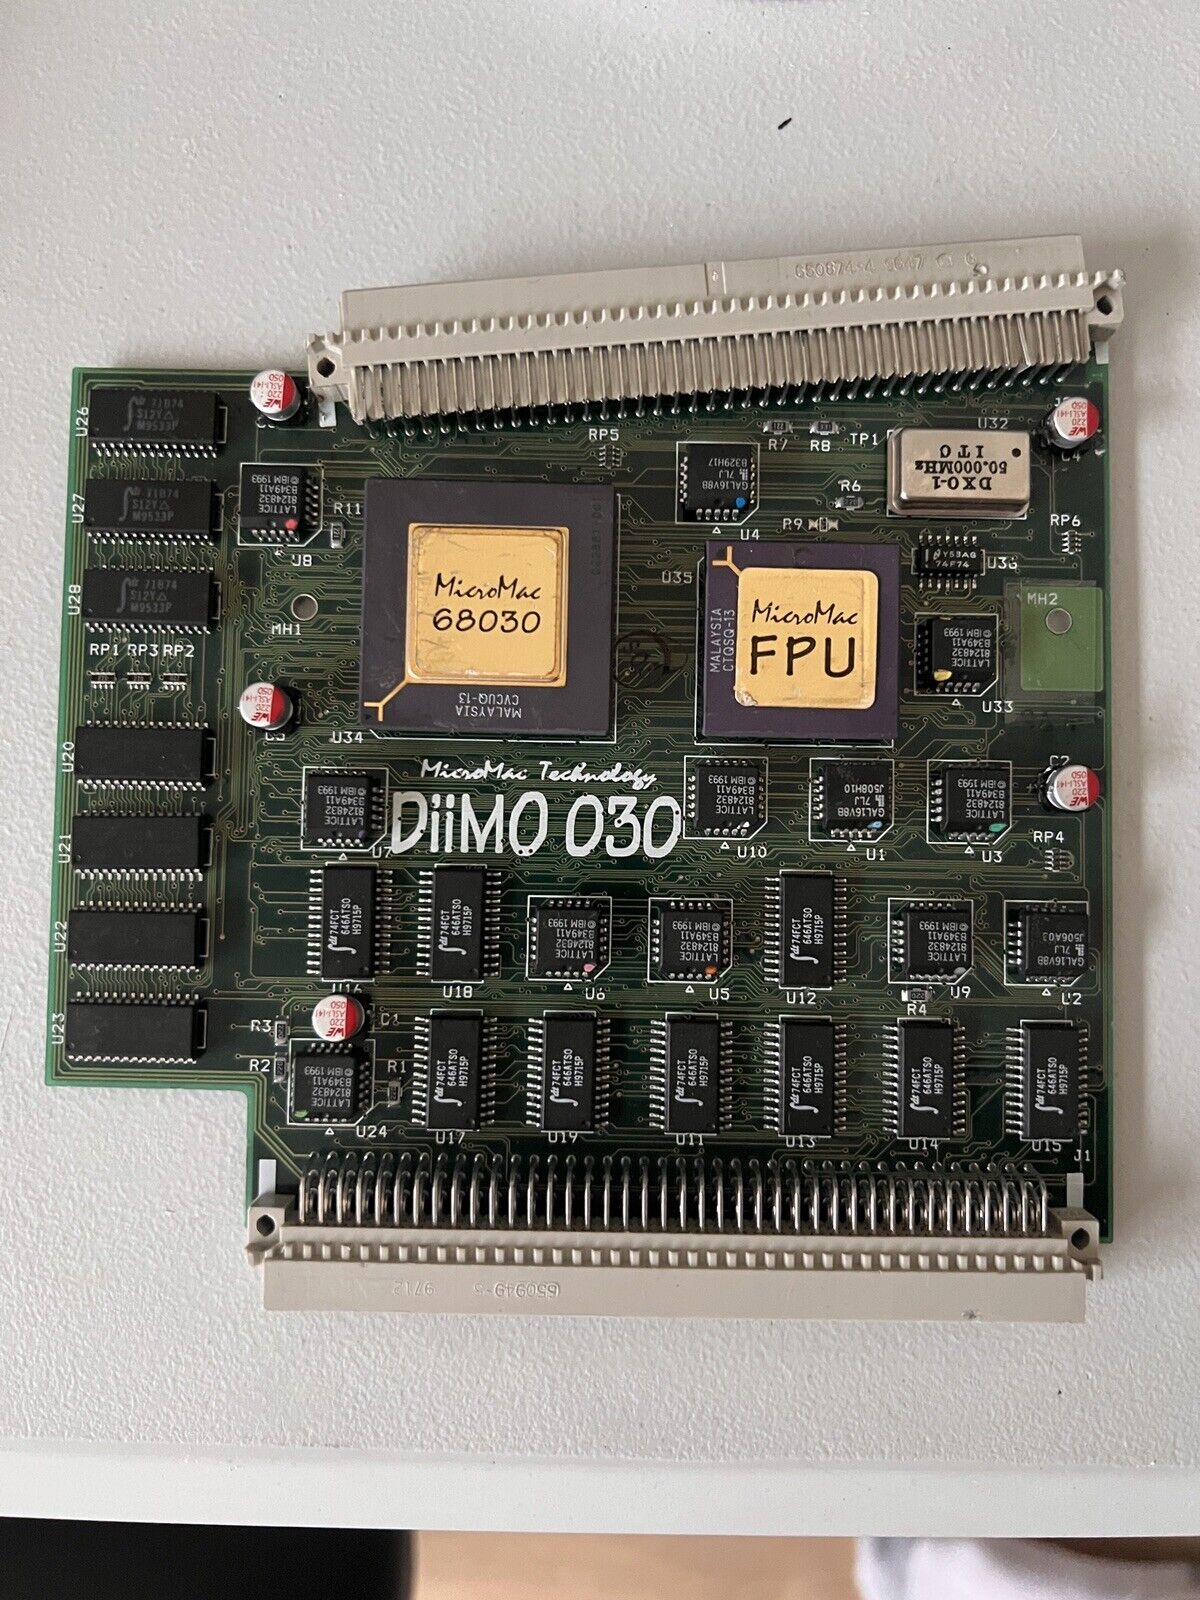 Macintosh SE/30 - Diimo Cache 50MHz  Accelerator - Recapped - No Adapter Needed